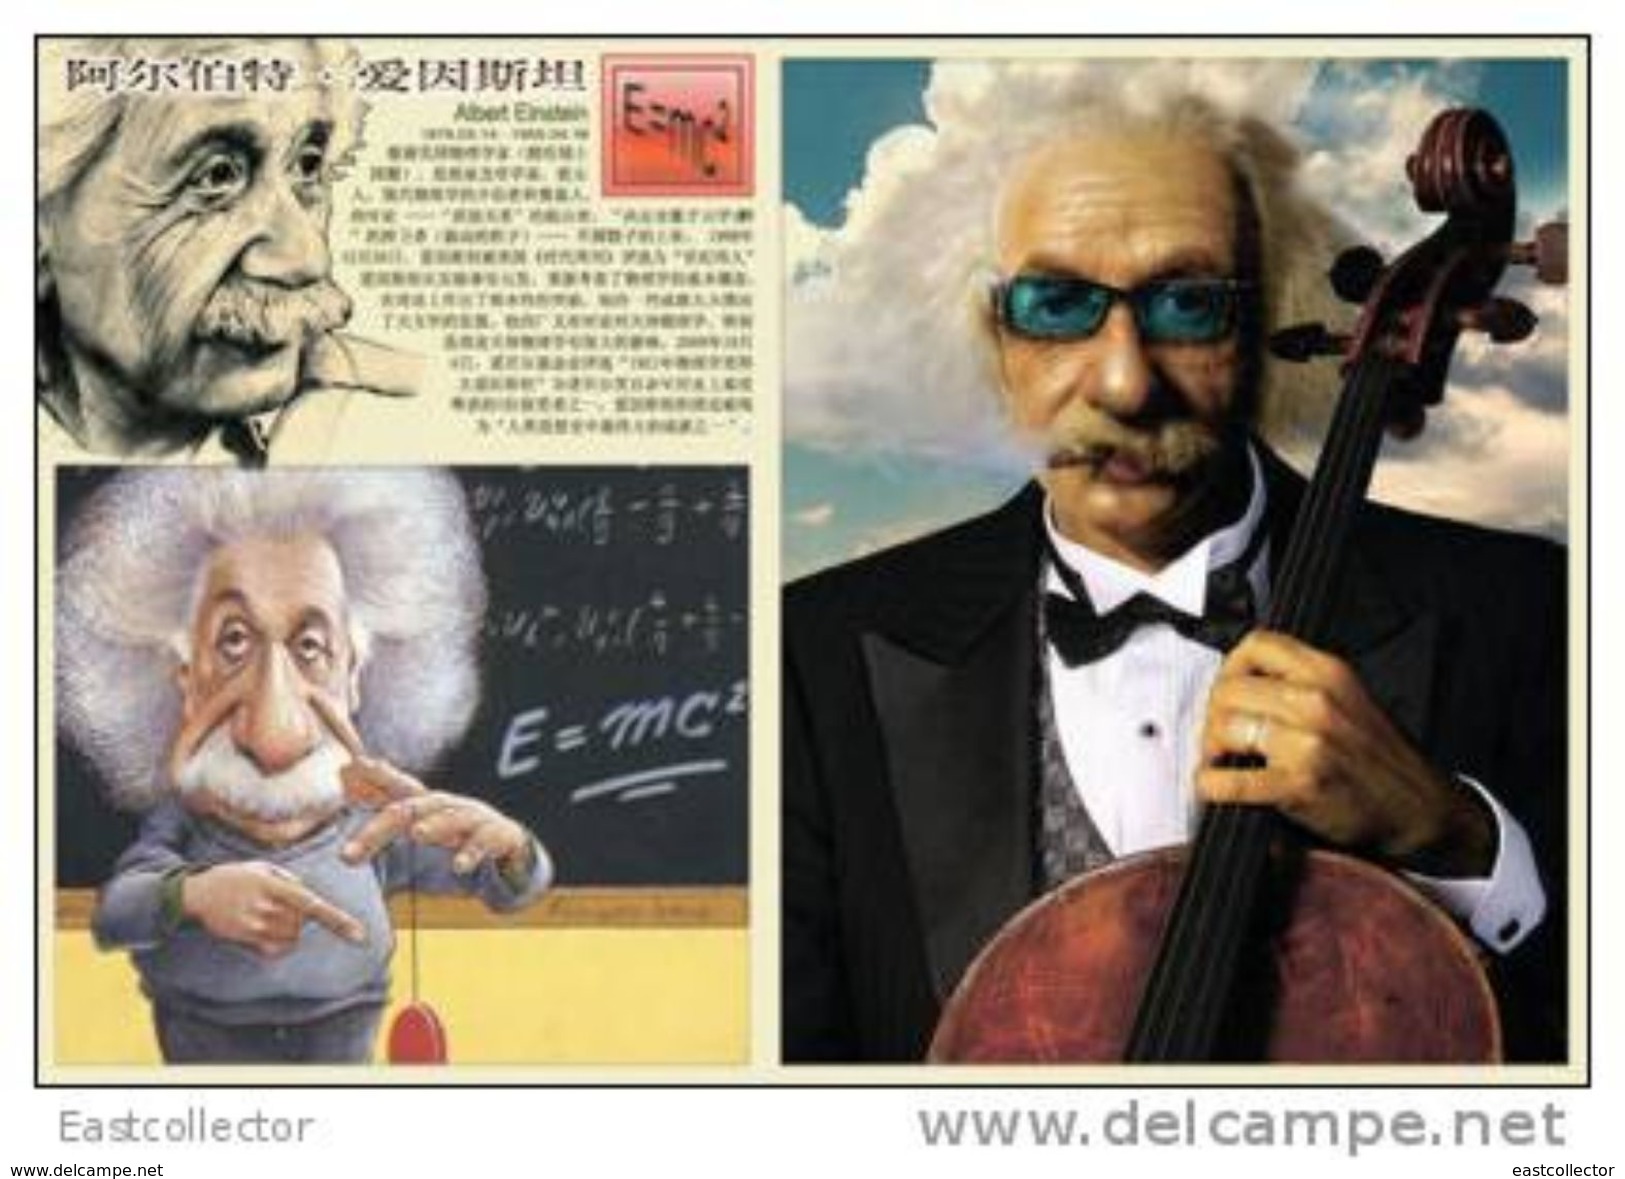 Postal Stationery Card Albert Einstein Pre-stamped Card 0322 - Premi Nobel